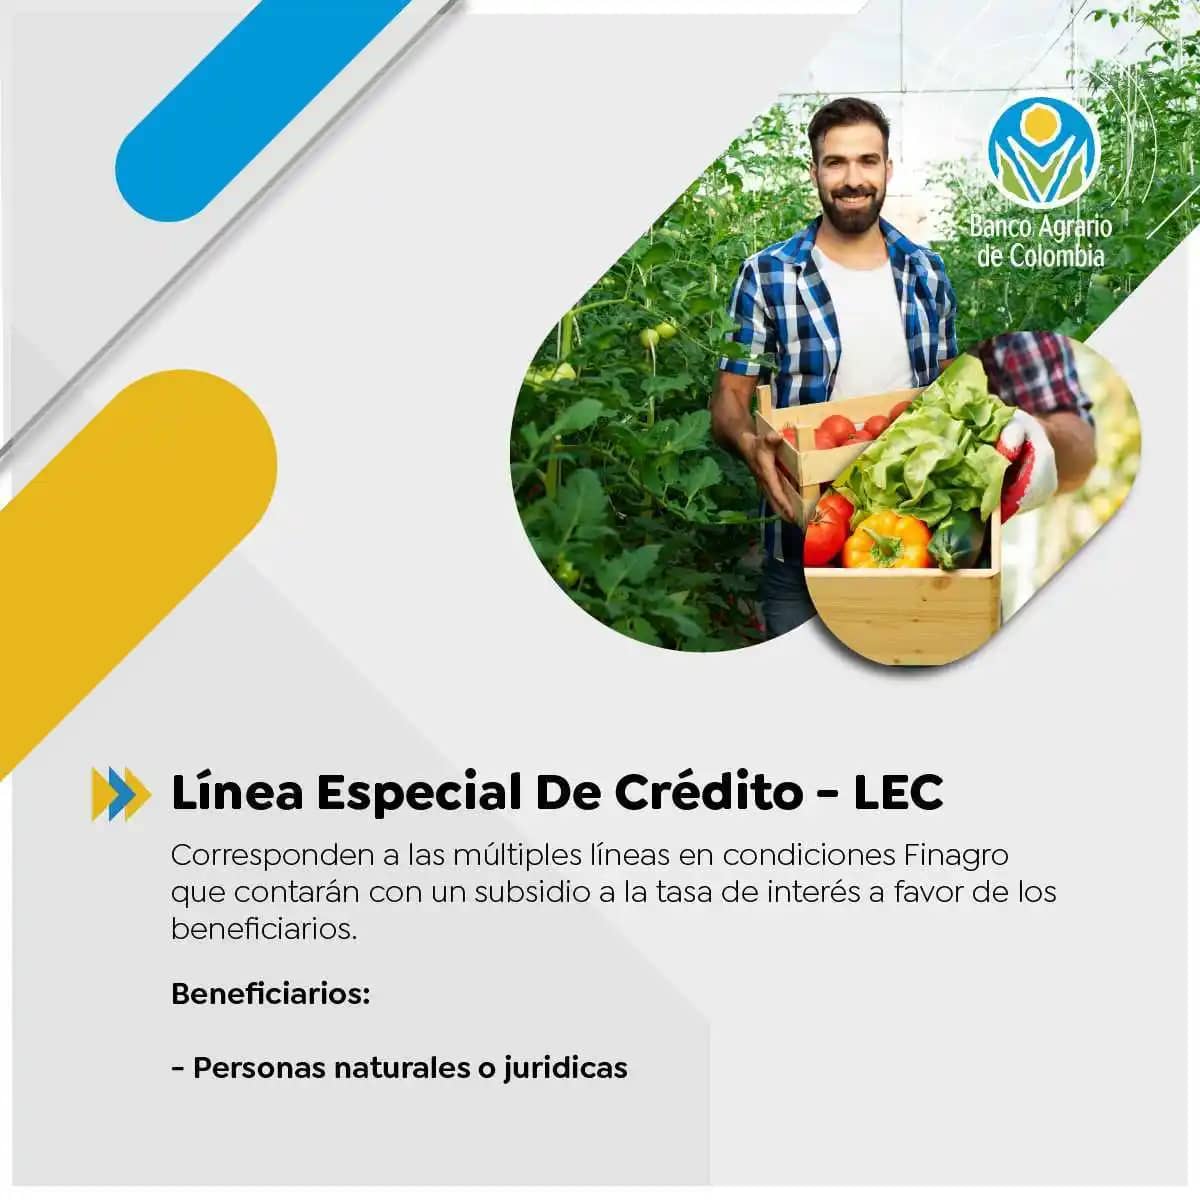 Línea Especial de Crédito - LEC - Banco Agrario